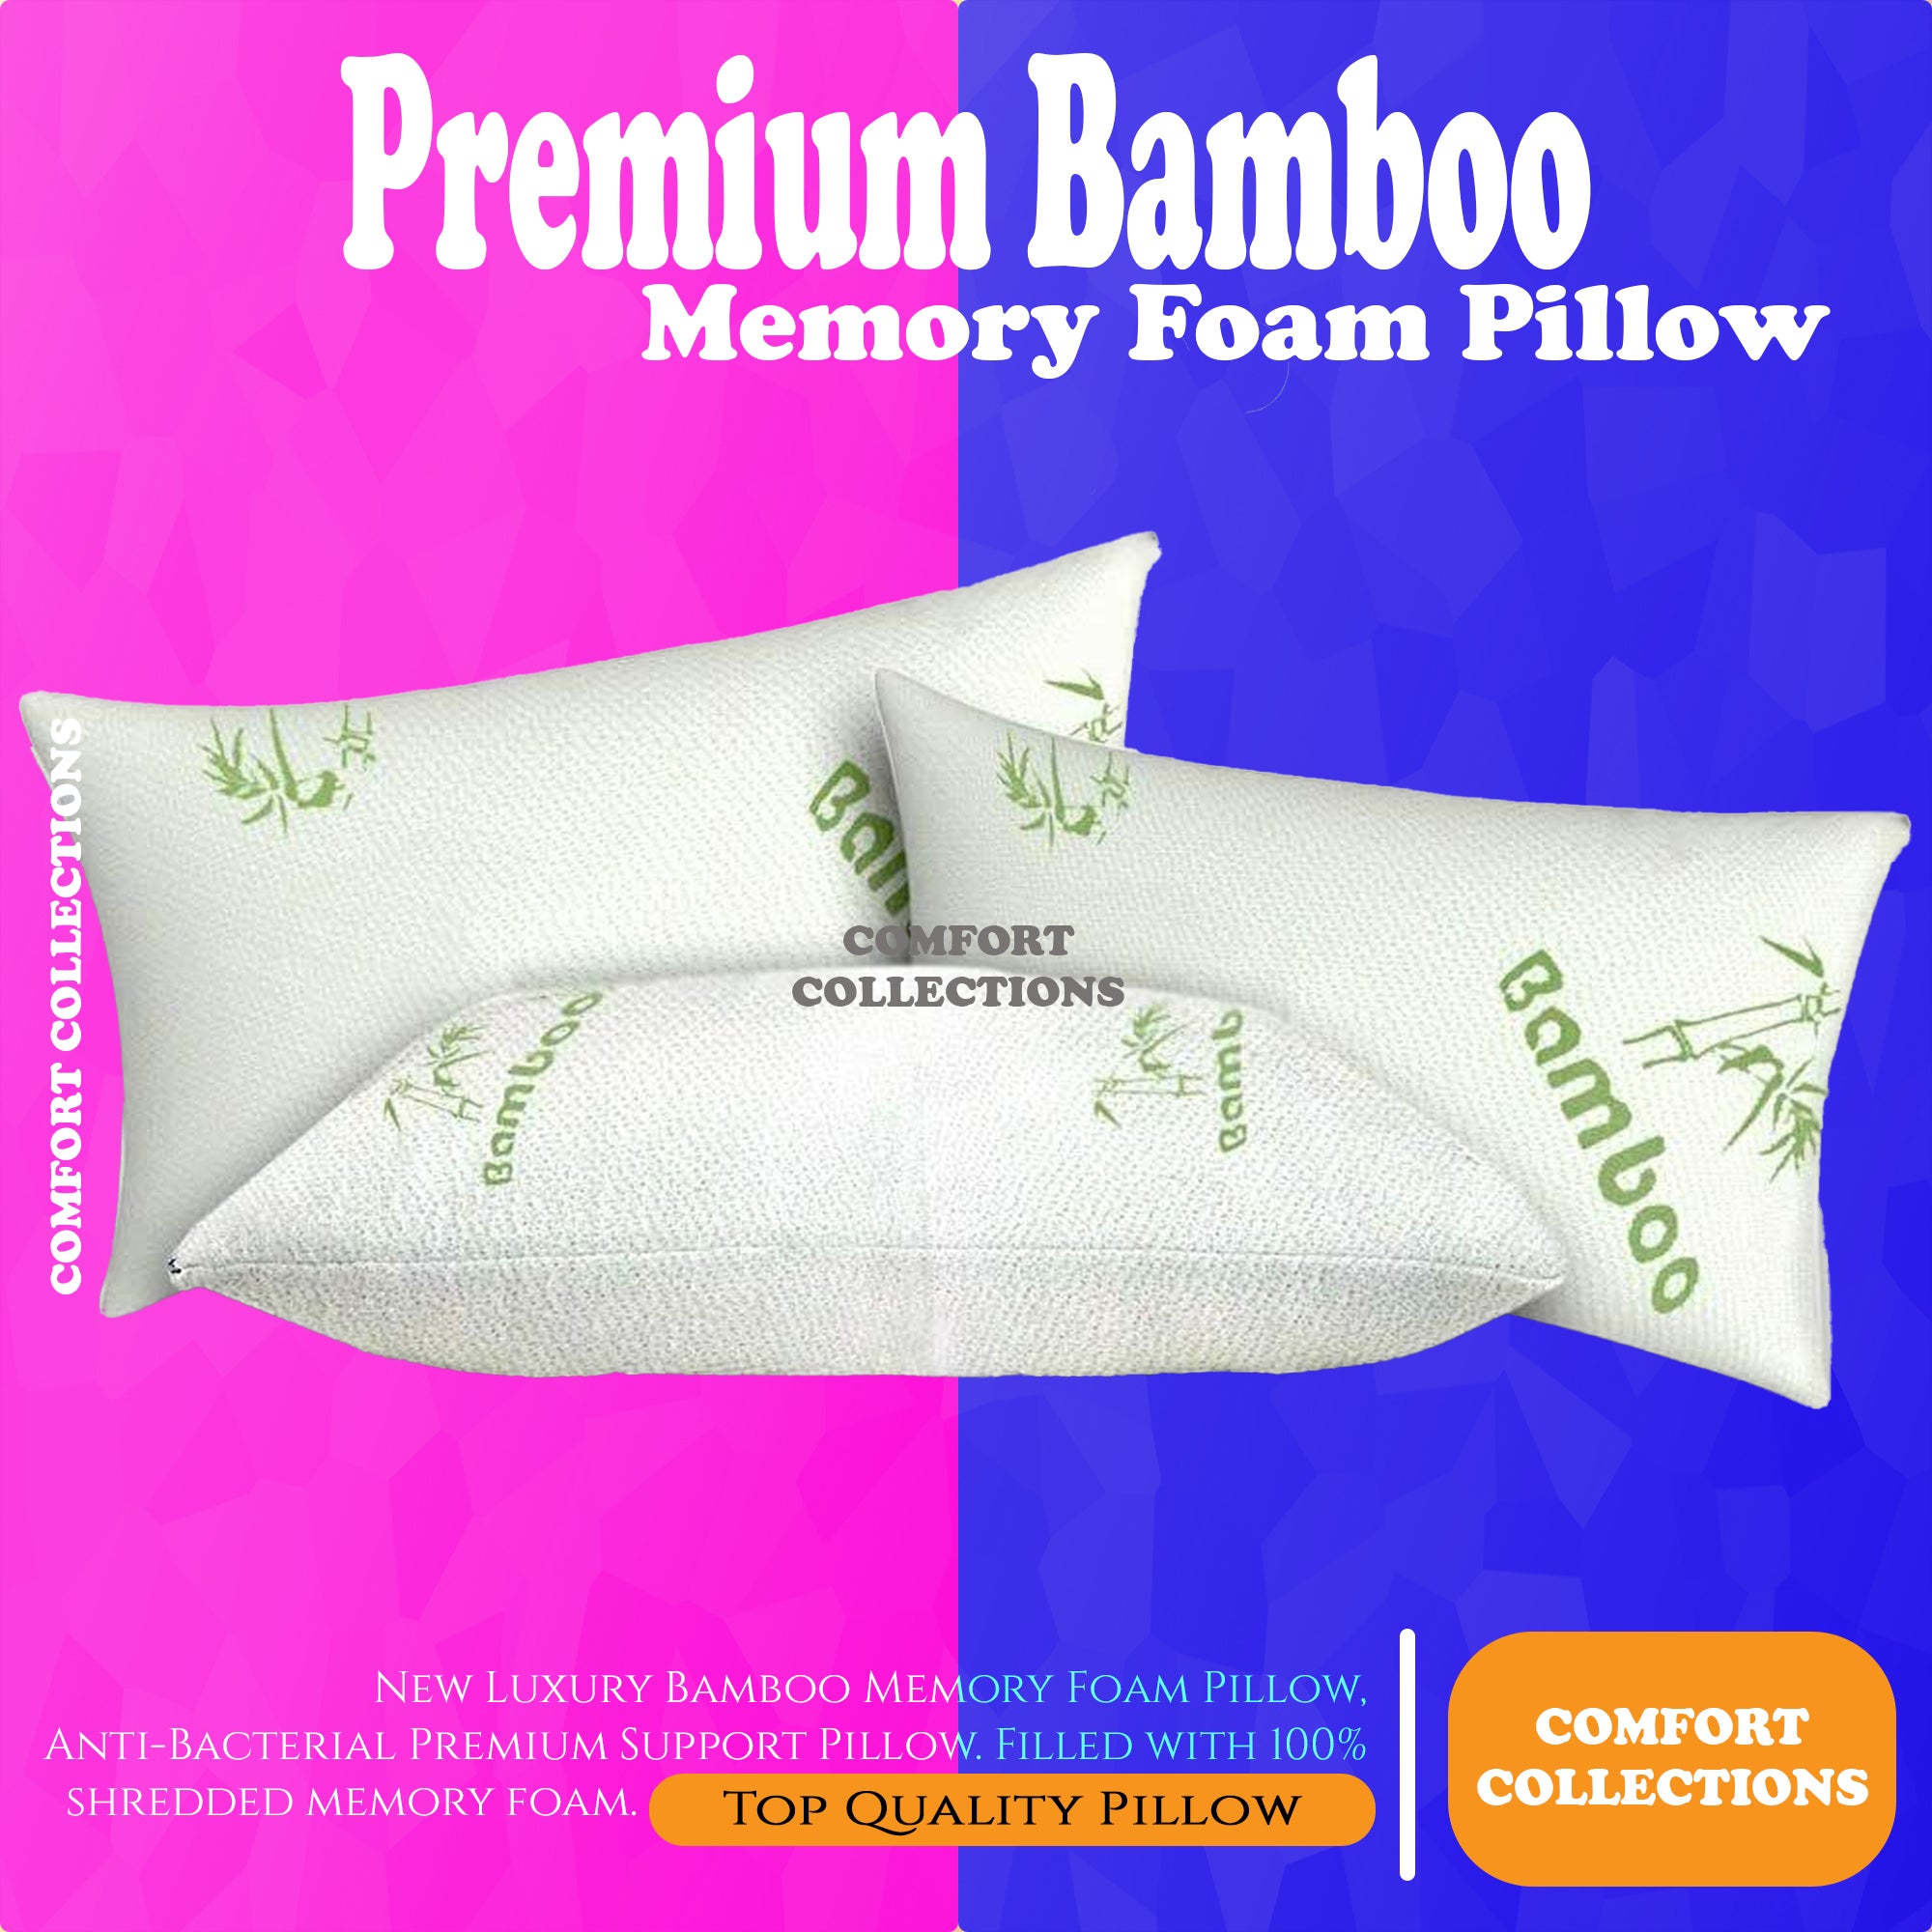 Luxury Bamboo Memory Foam Pillow, Anti-Bacterial Premium Support Pillow